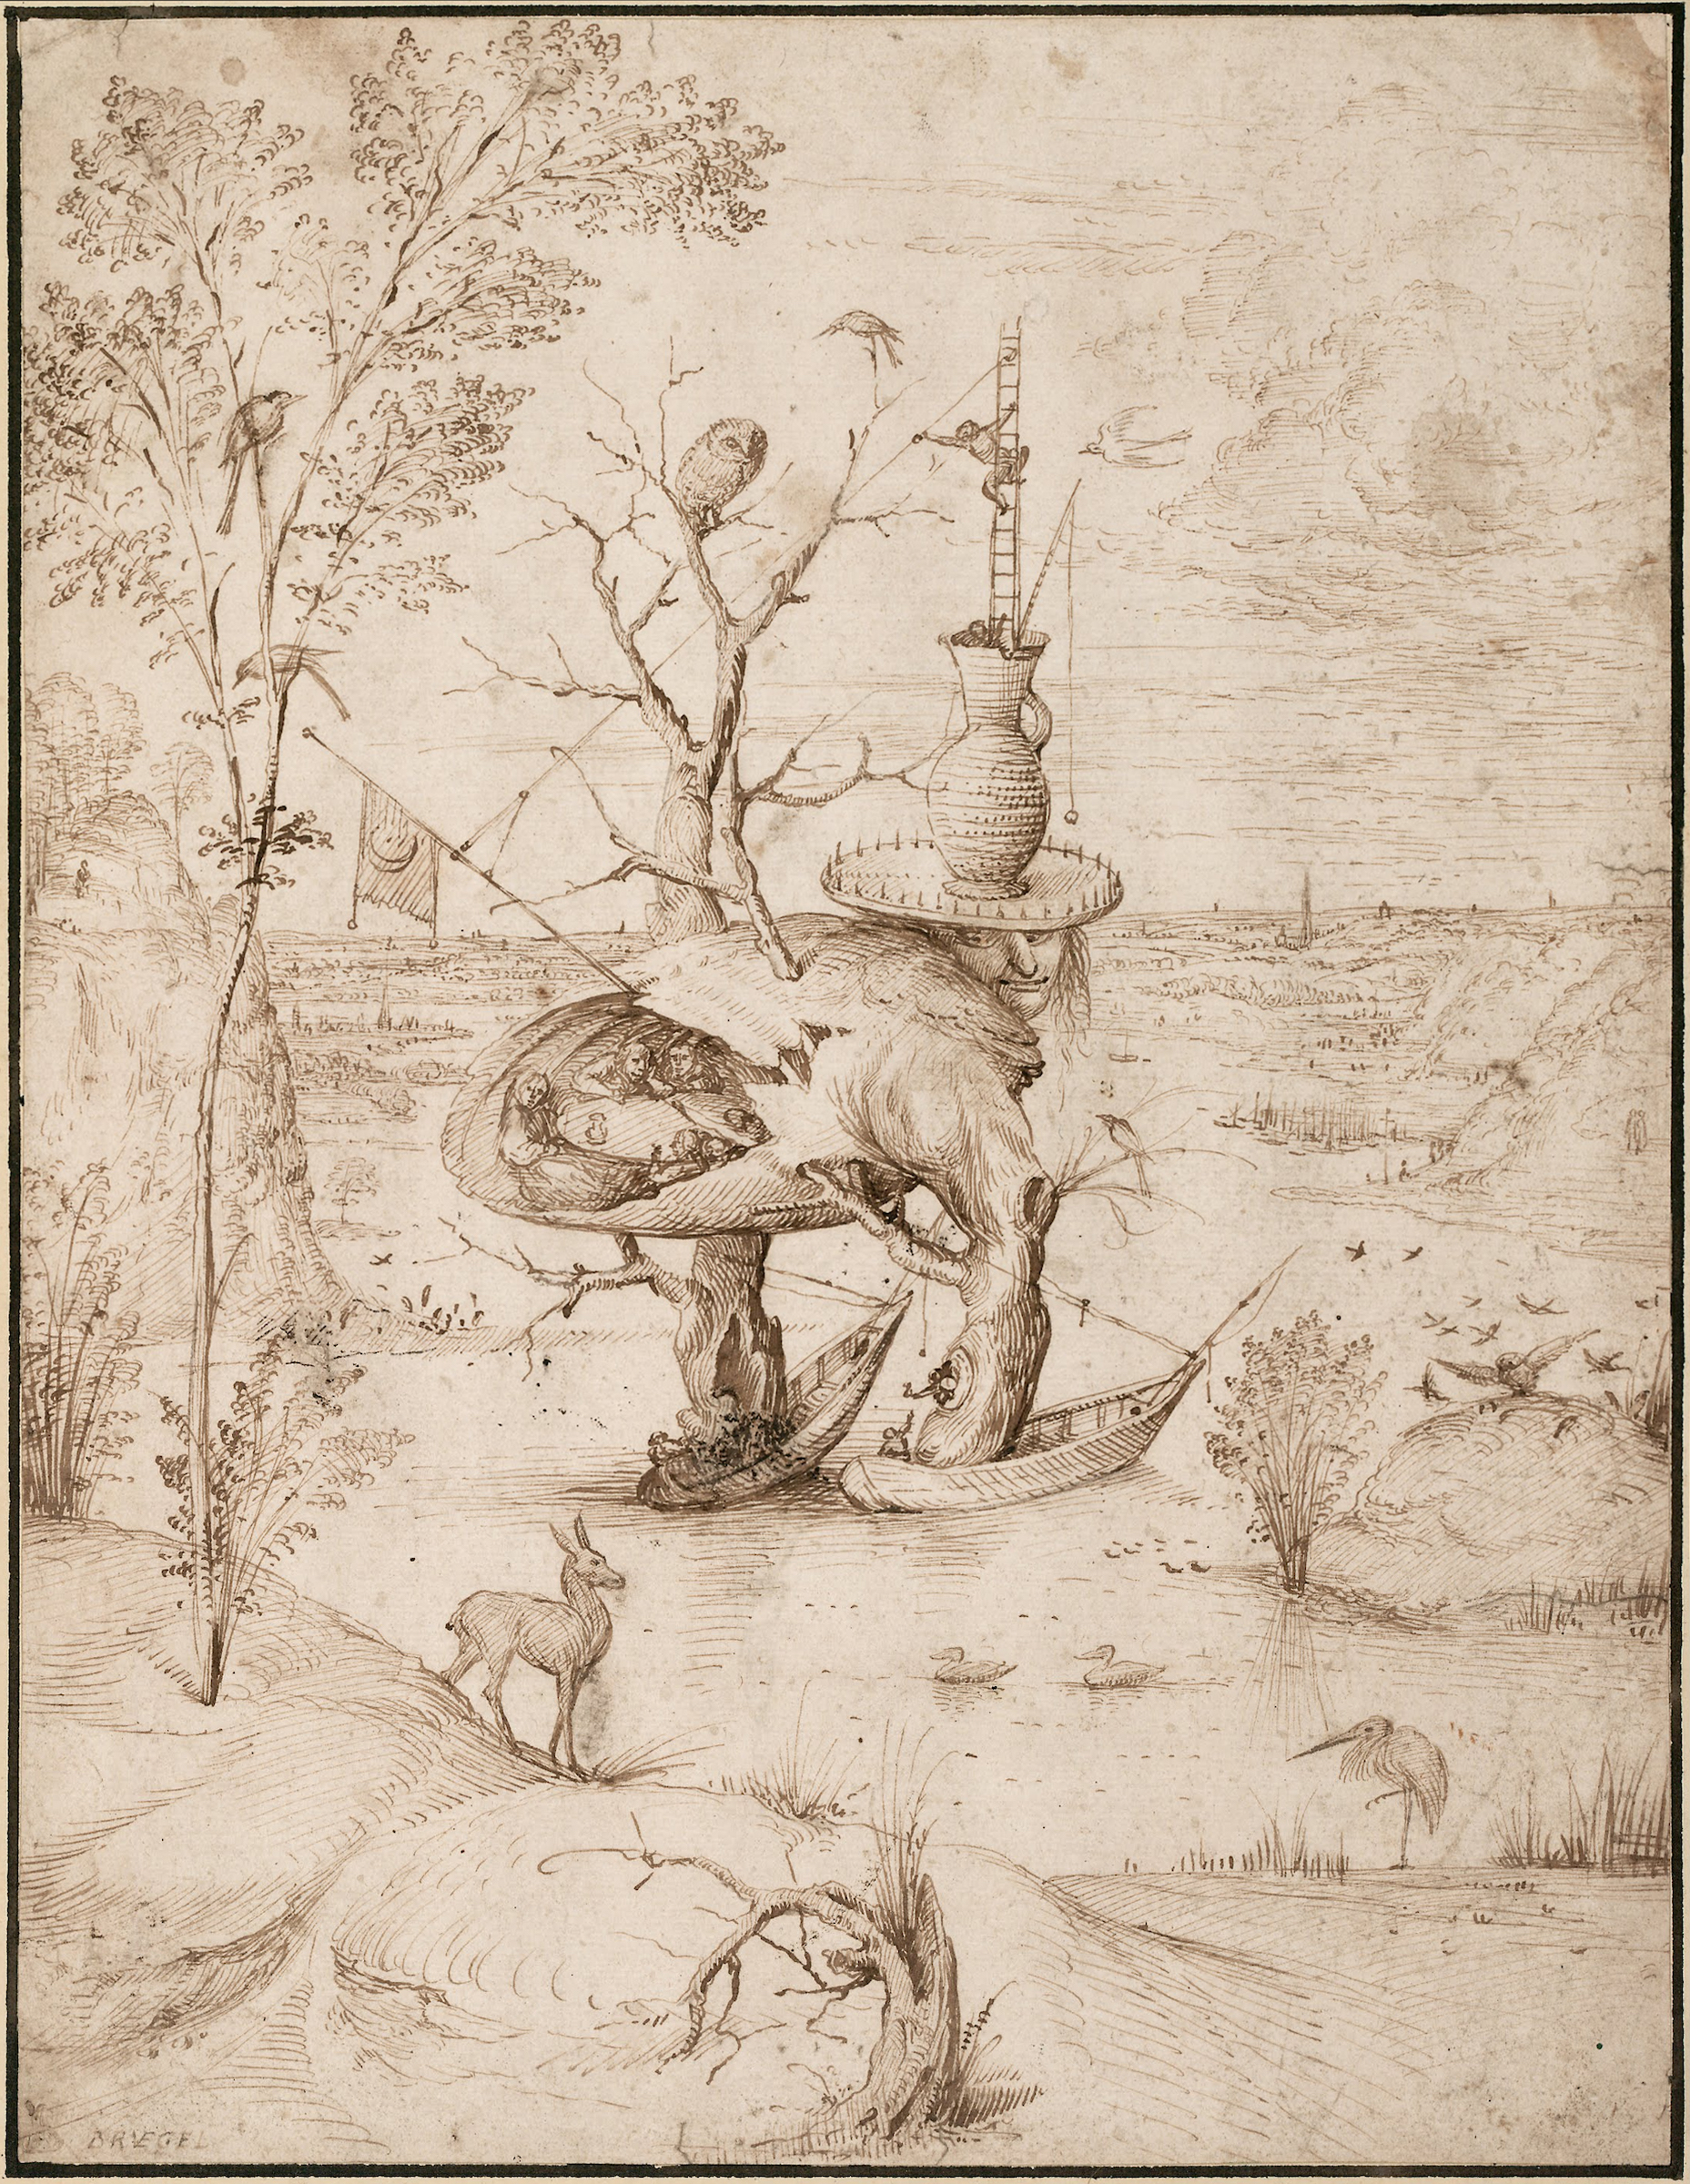 Човек дрво by Hieronymus Bosch - 1500. - 27.7 x 21.1 cm 